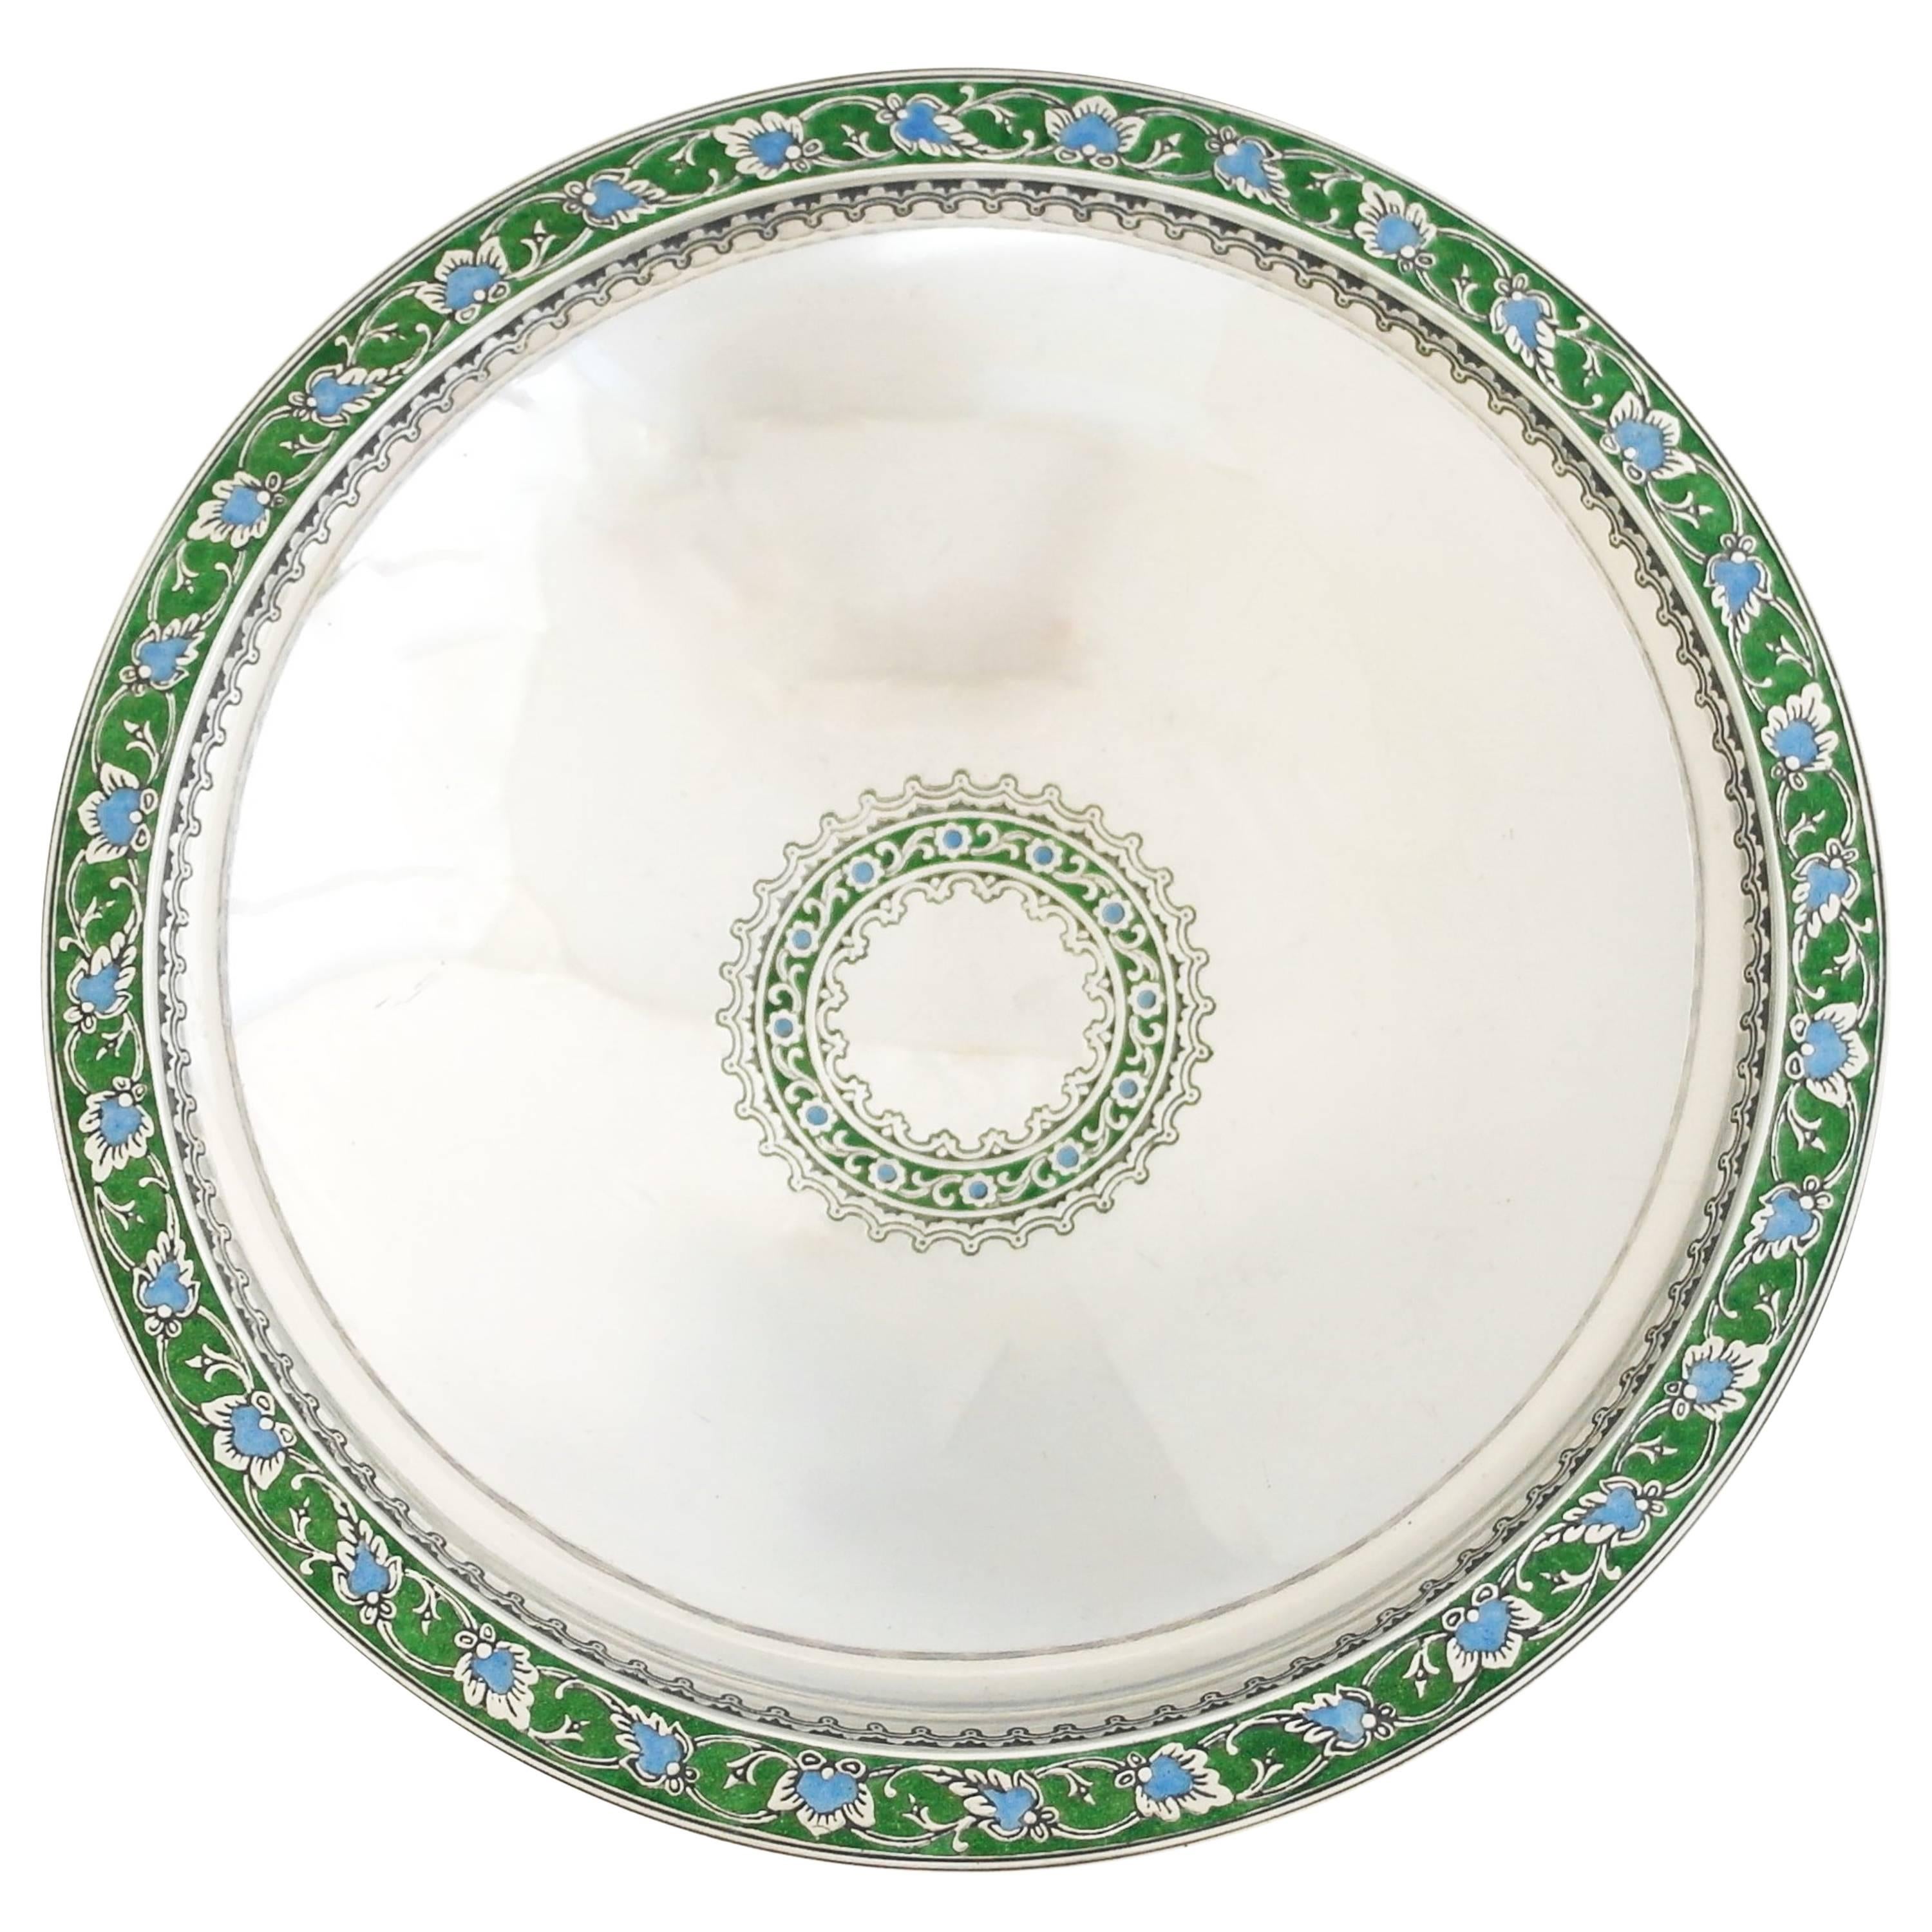 Spectacular Tiffany & Co Art Deco Sterling Silver & Enamel Centerpiece Bowl 1920